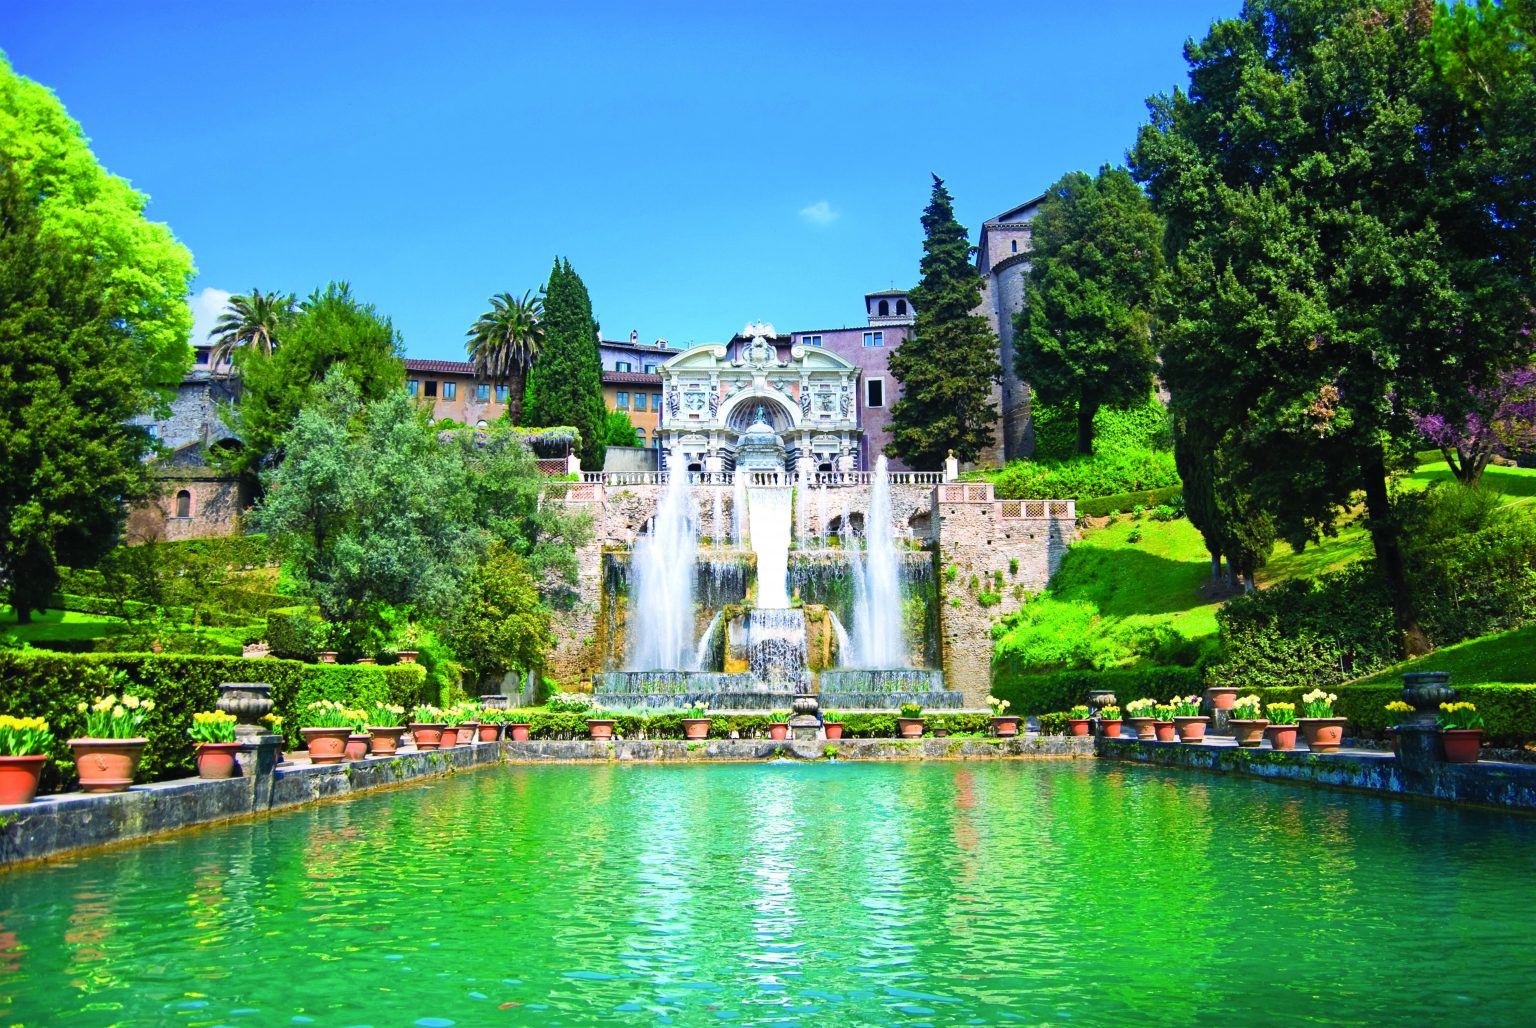 Discover Villa d'Este Italia! Heritage Italy Travel and Life